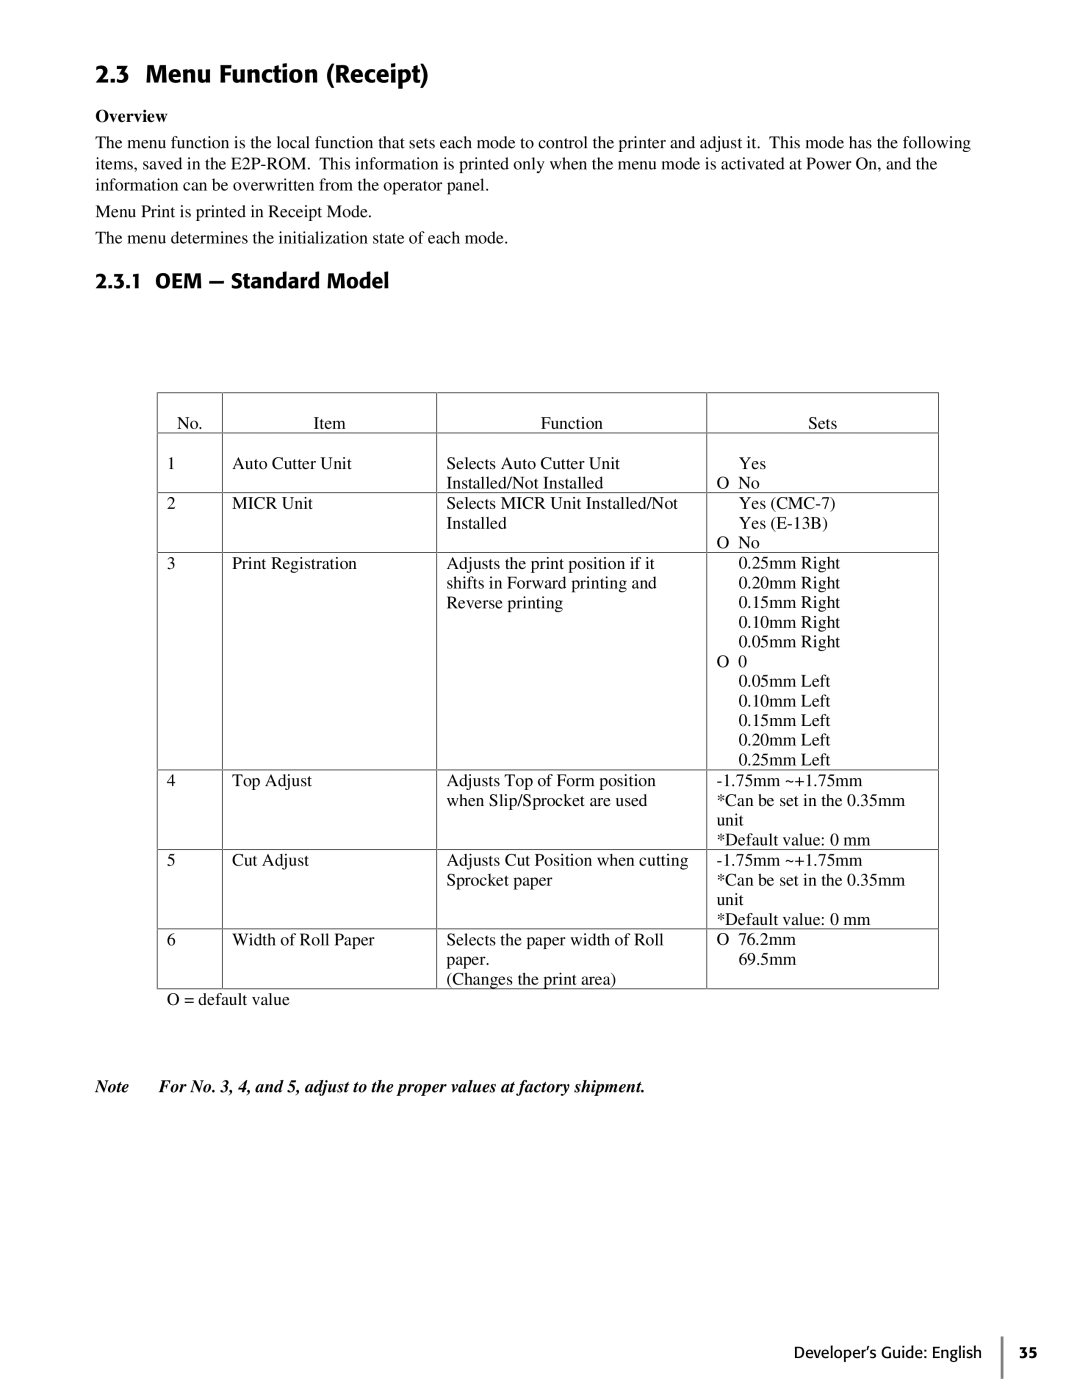 Oki 425S manual Menu Function Receipt, OEM Standard Model, Overview 